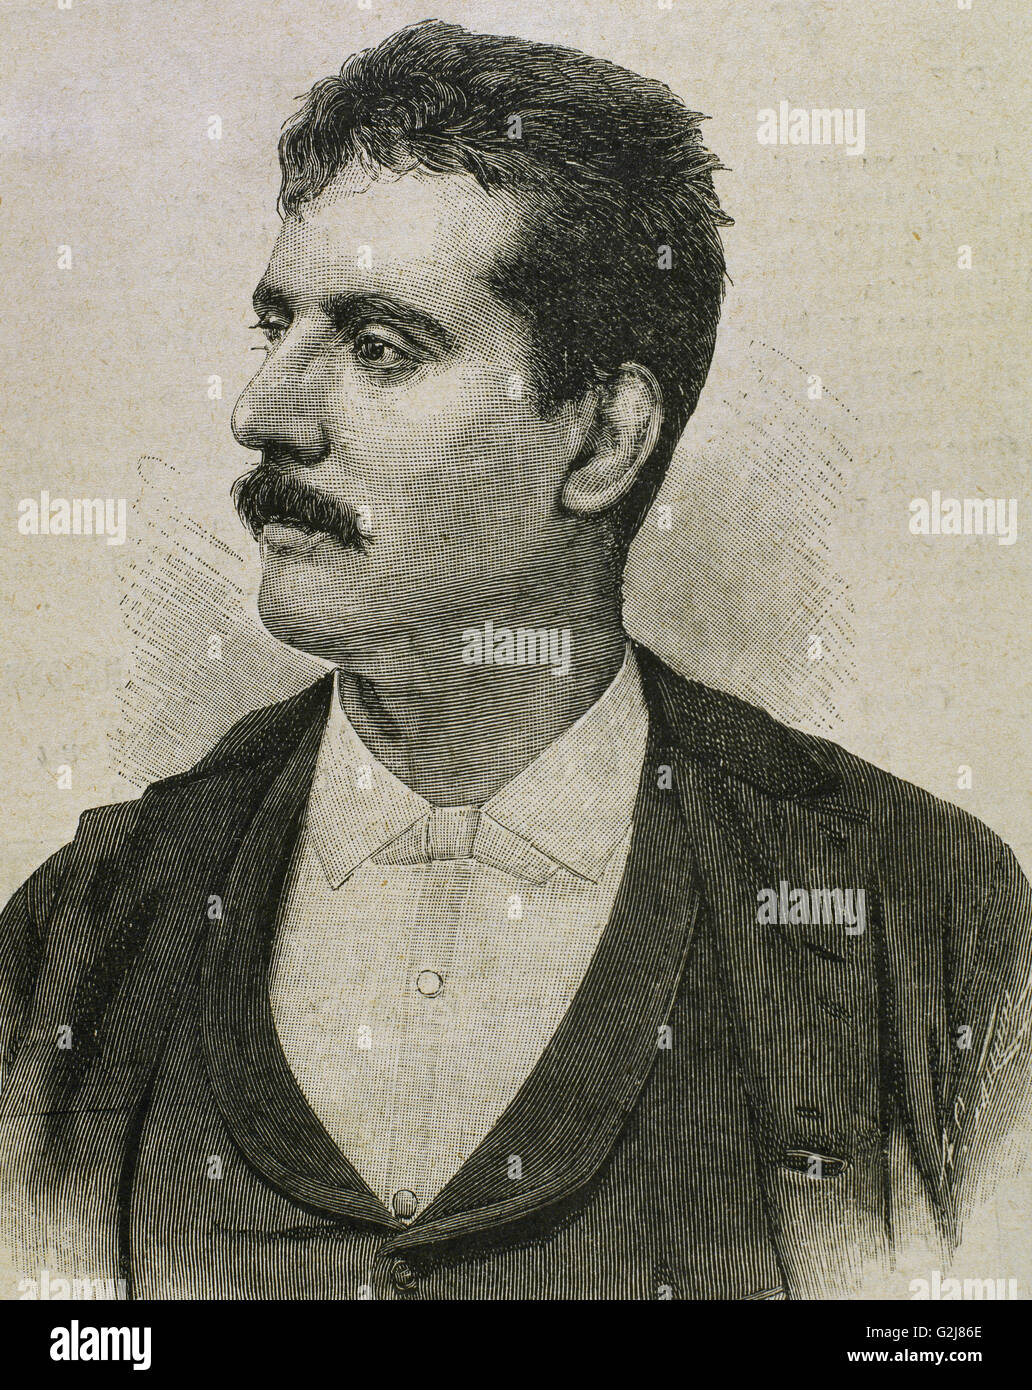 Giacomo Puccini (1858-1924). Italienischer Komponist. Porträt. Gravur. Stockfoto